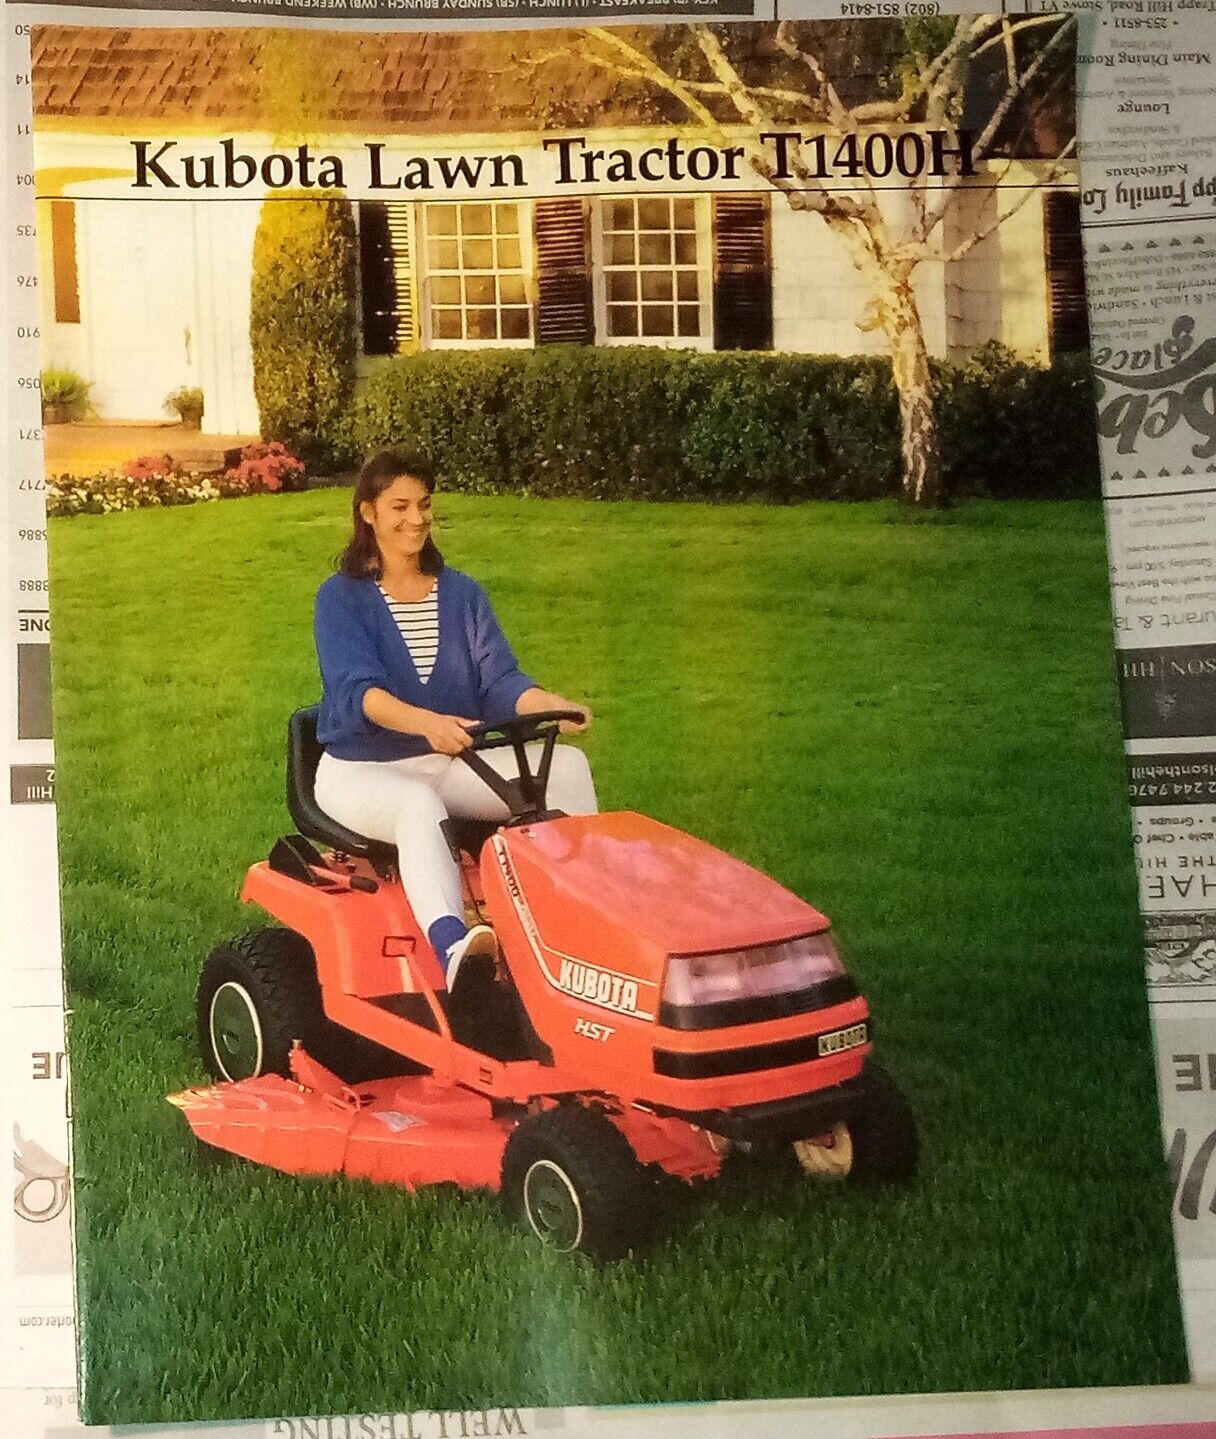 Kubota Lawn Tractor T1400H Brochure